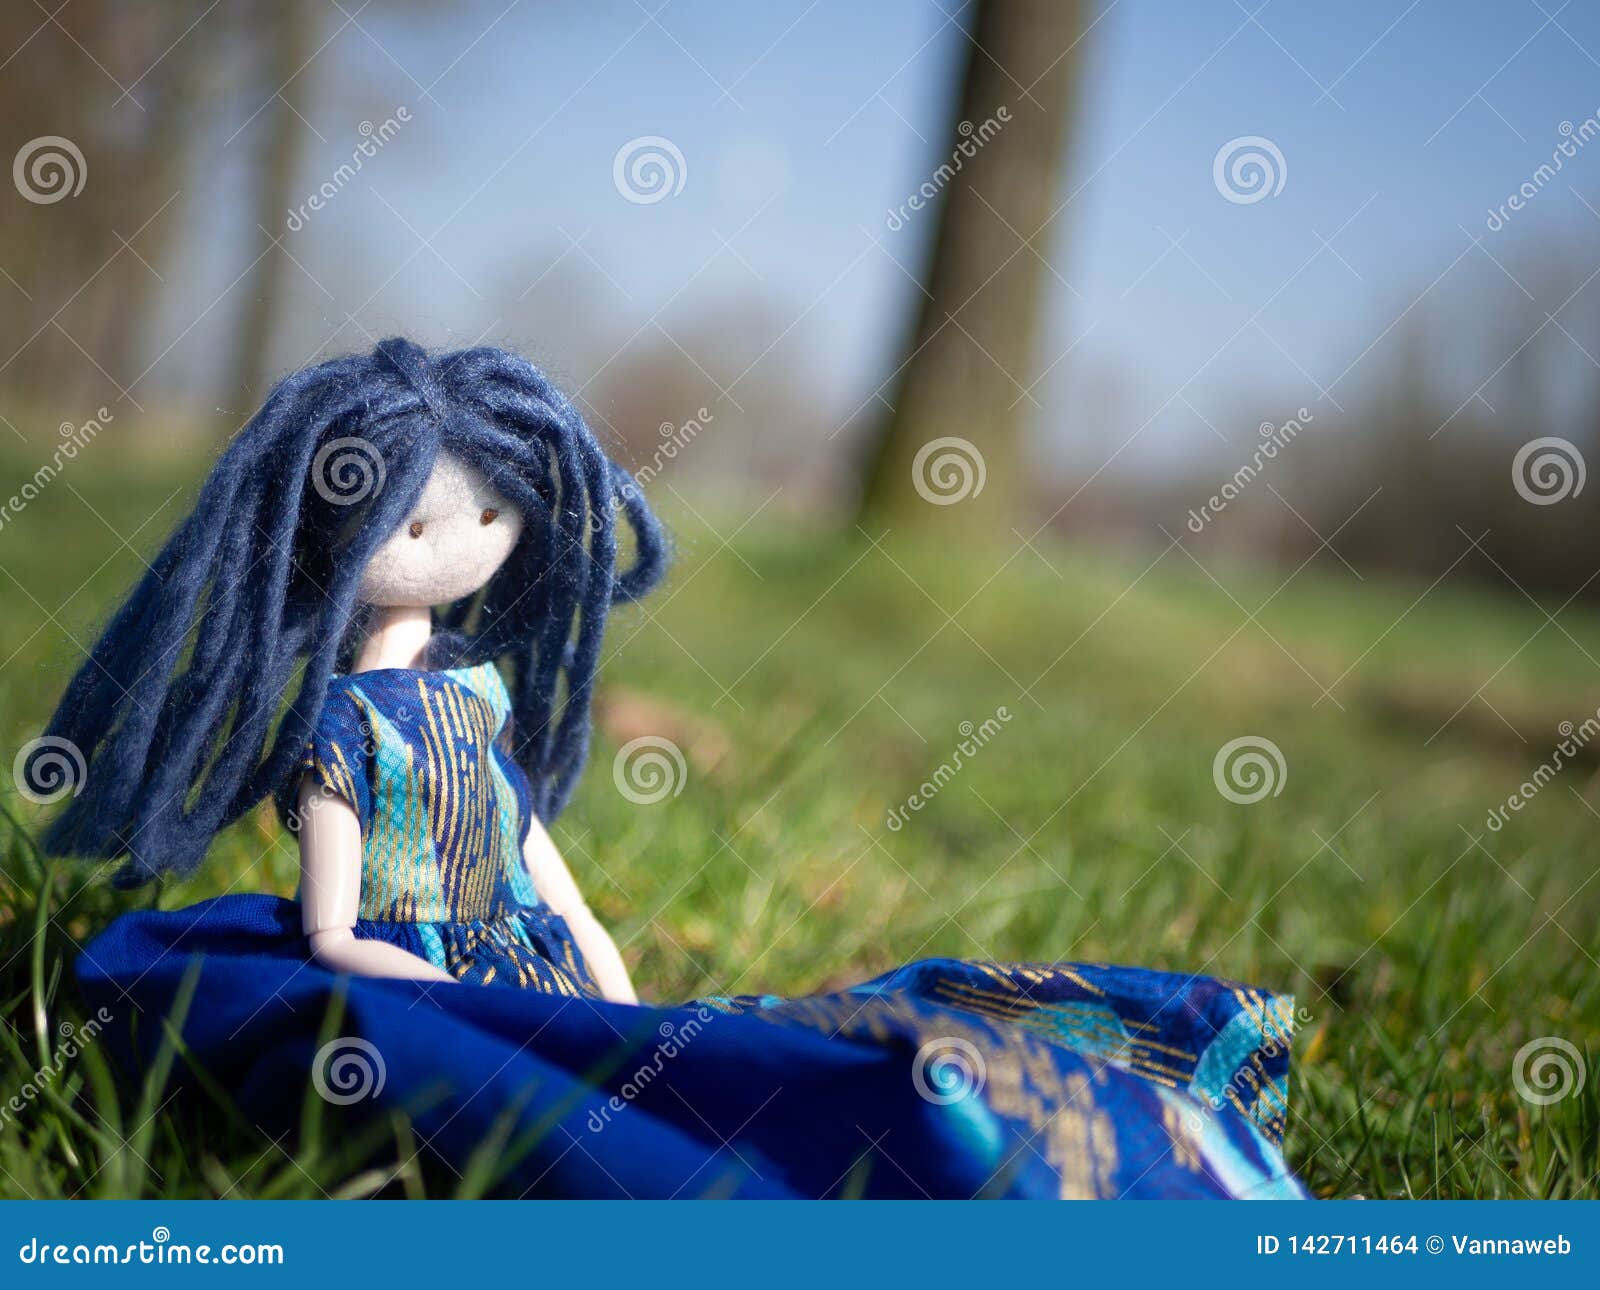 rag doll with blue hair